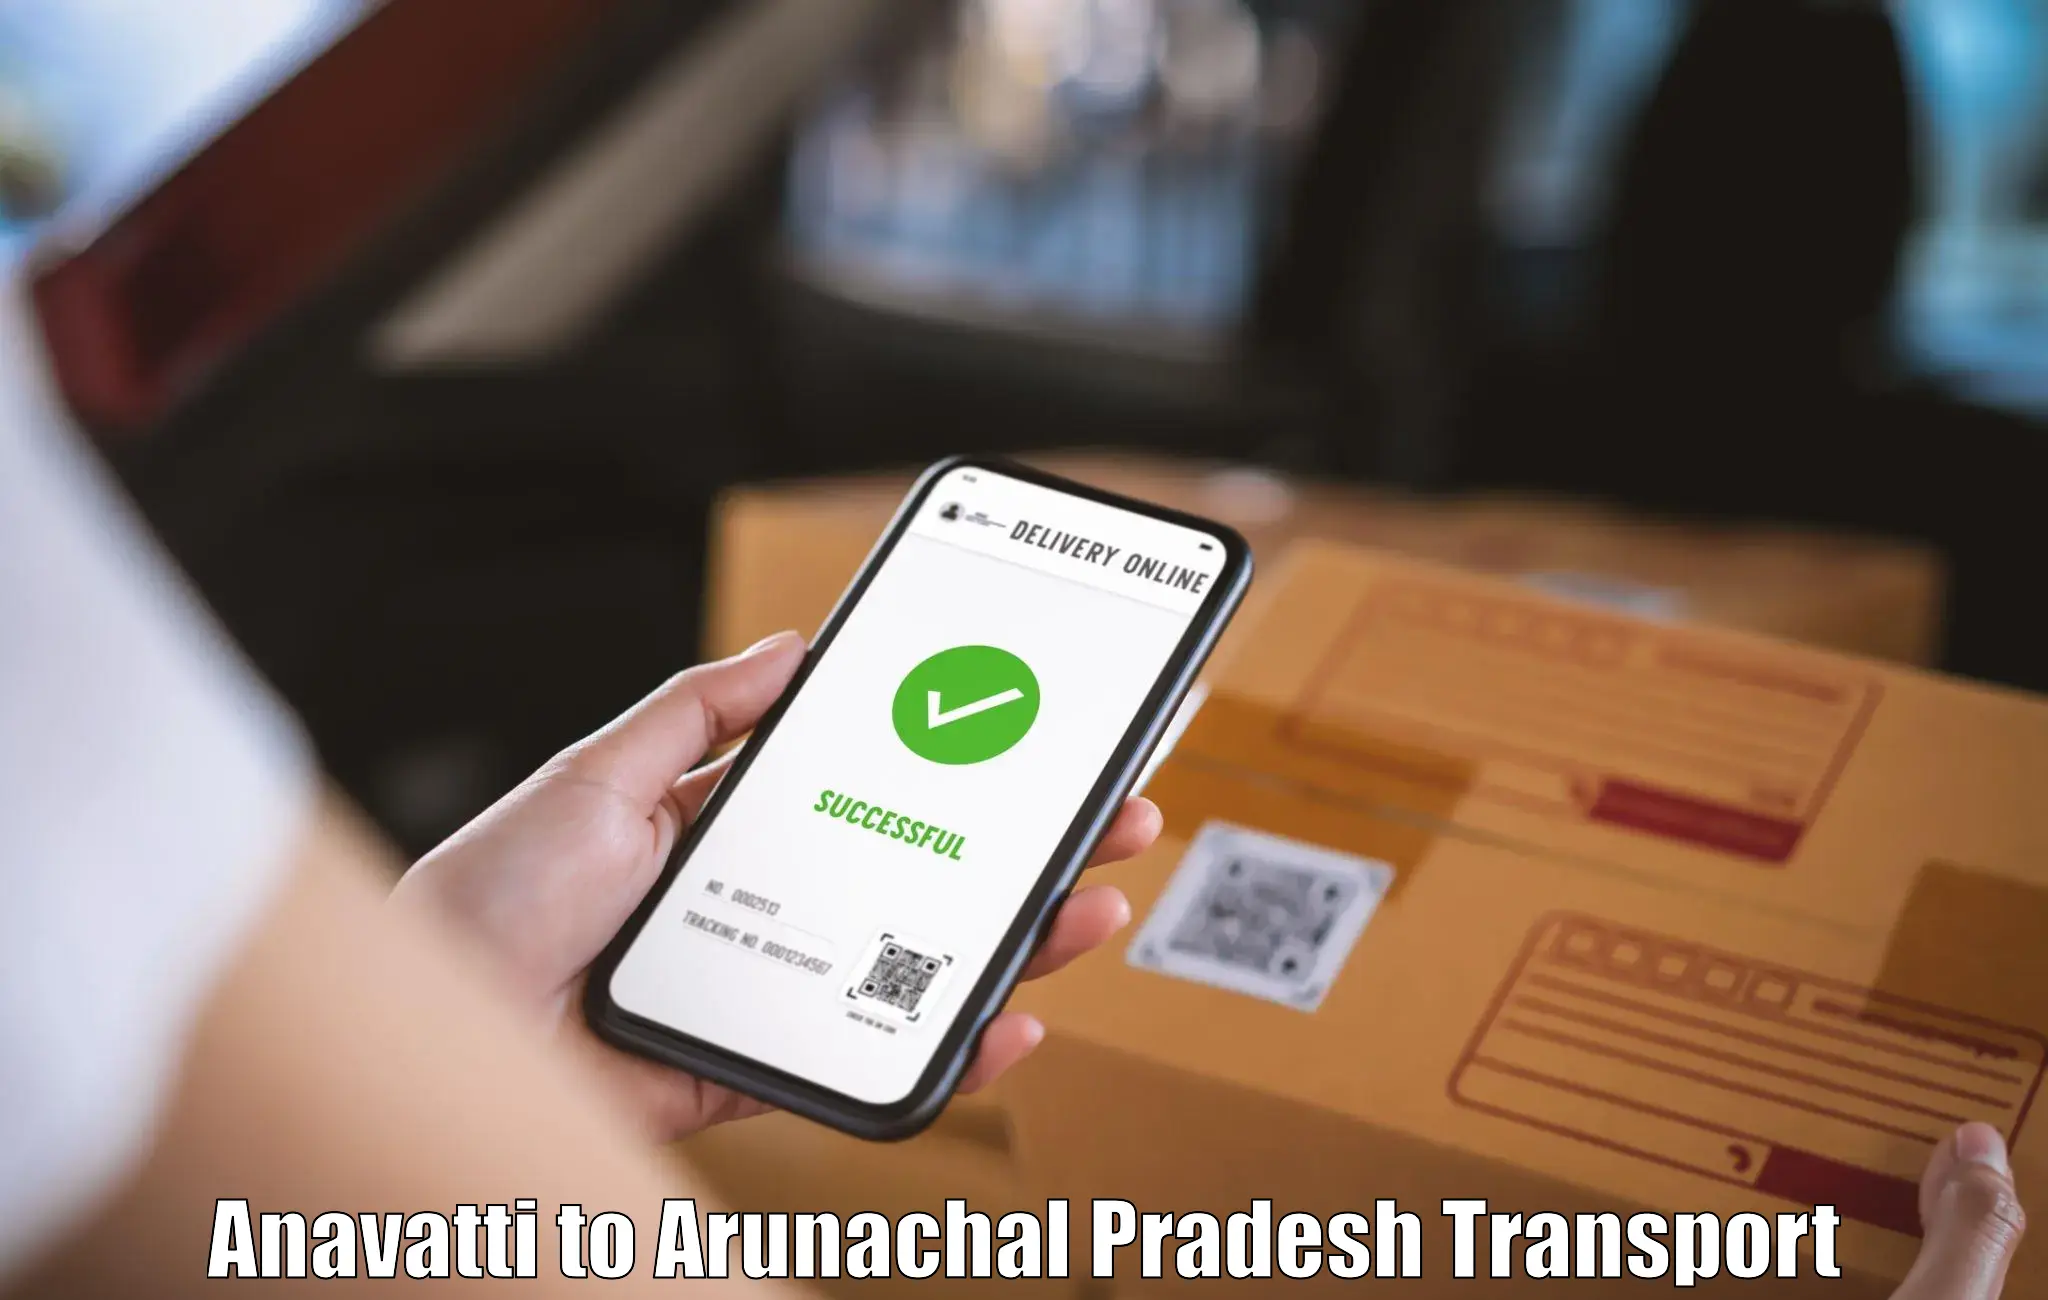 Pick up transport service Anavatti to Tirap